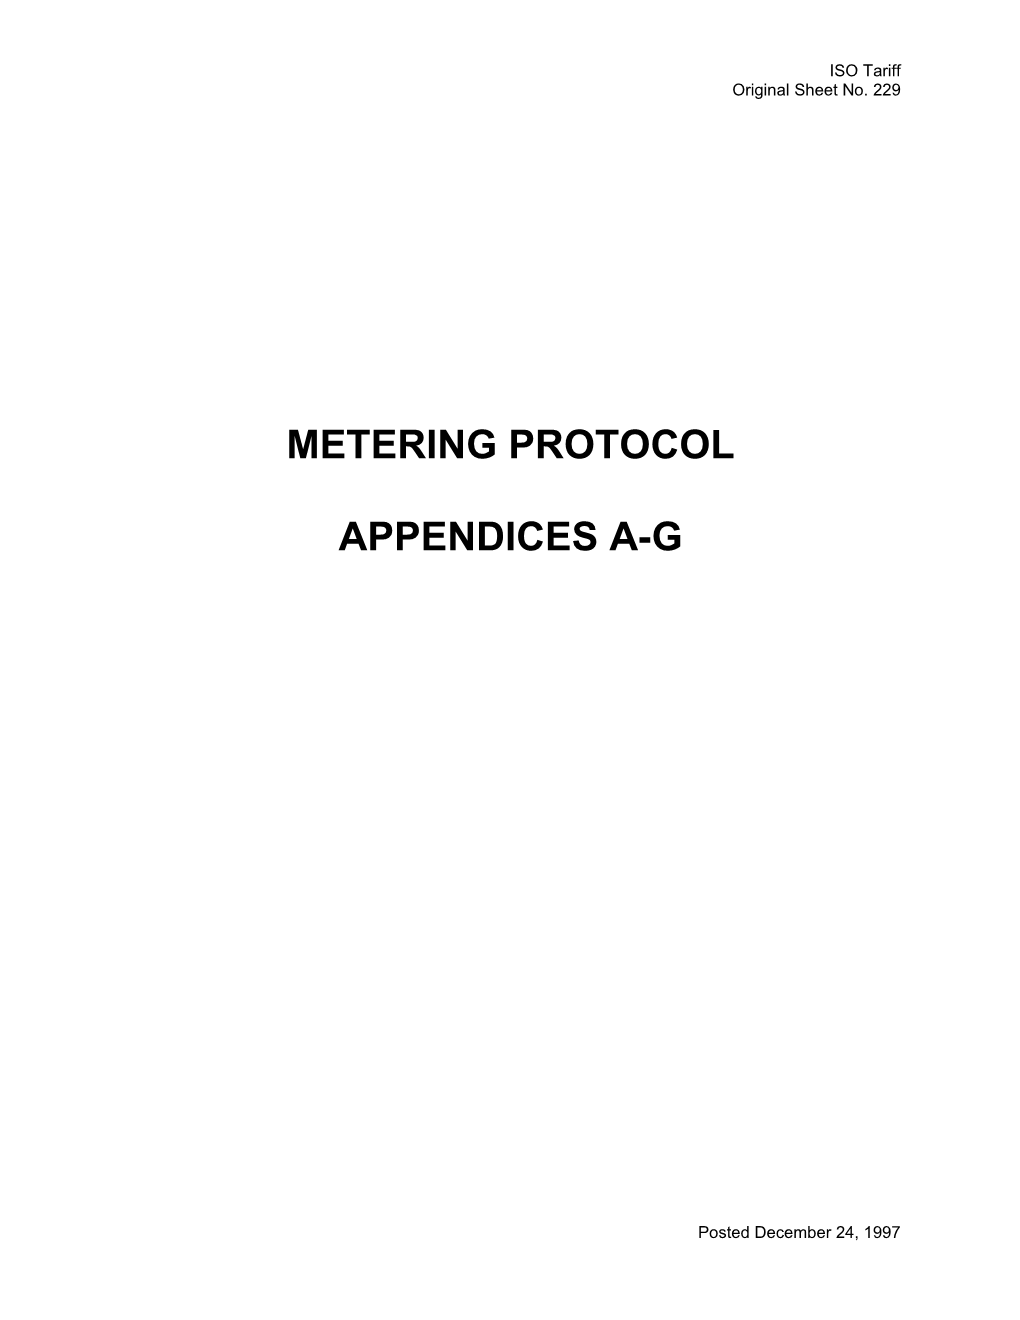 Metering Protocol Appendices